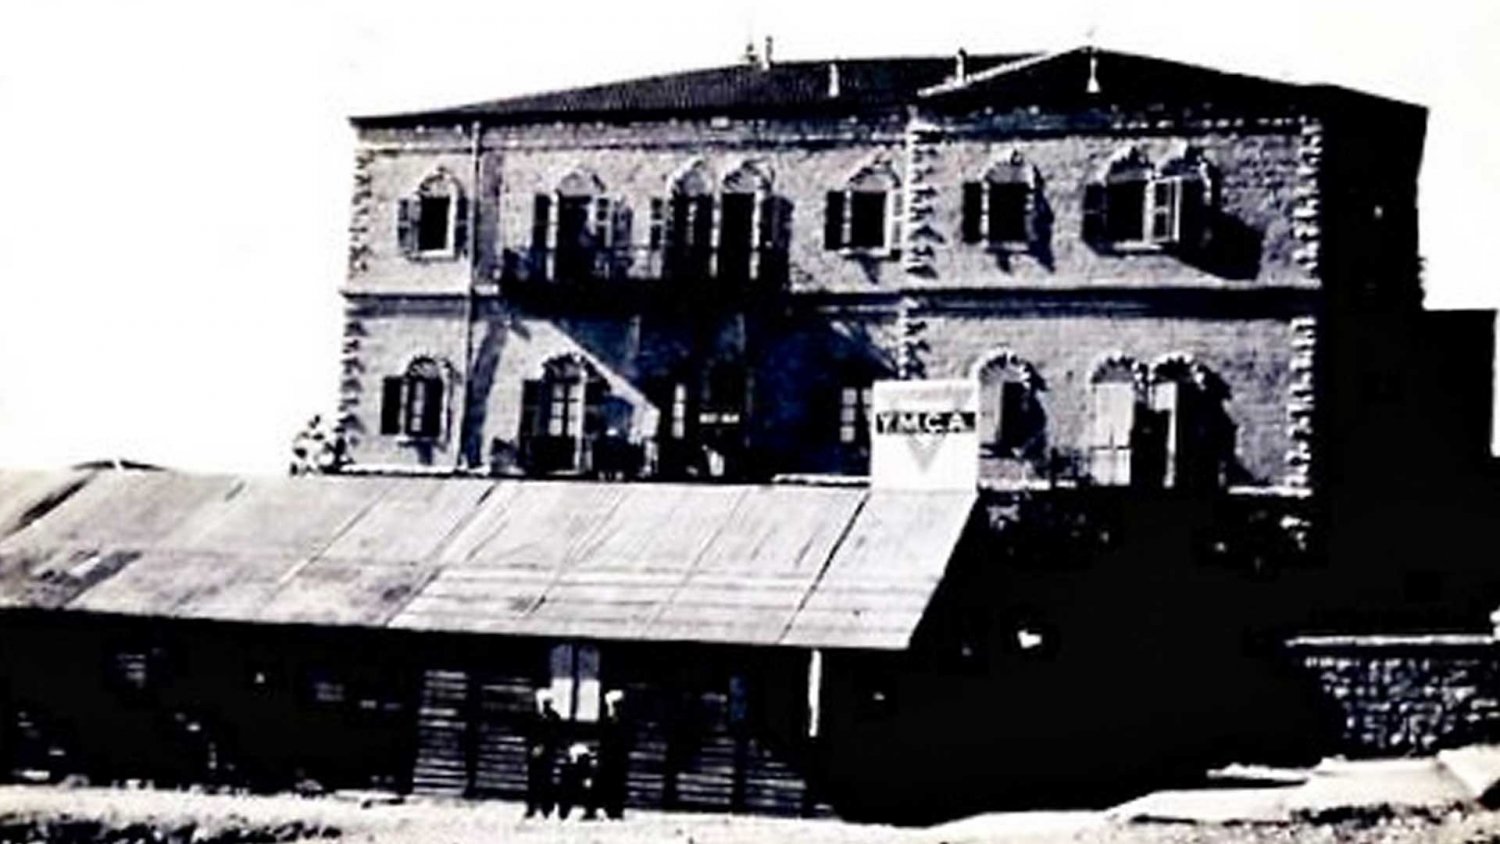 The Jerusalem YMCA in the 1920s